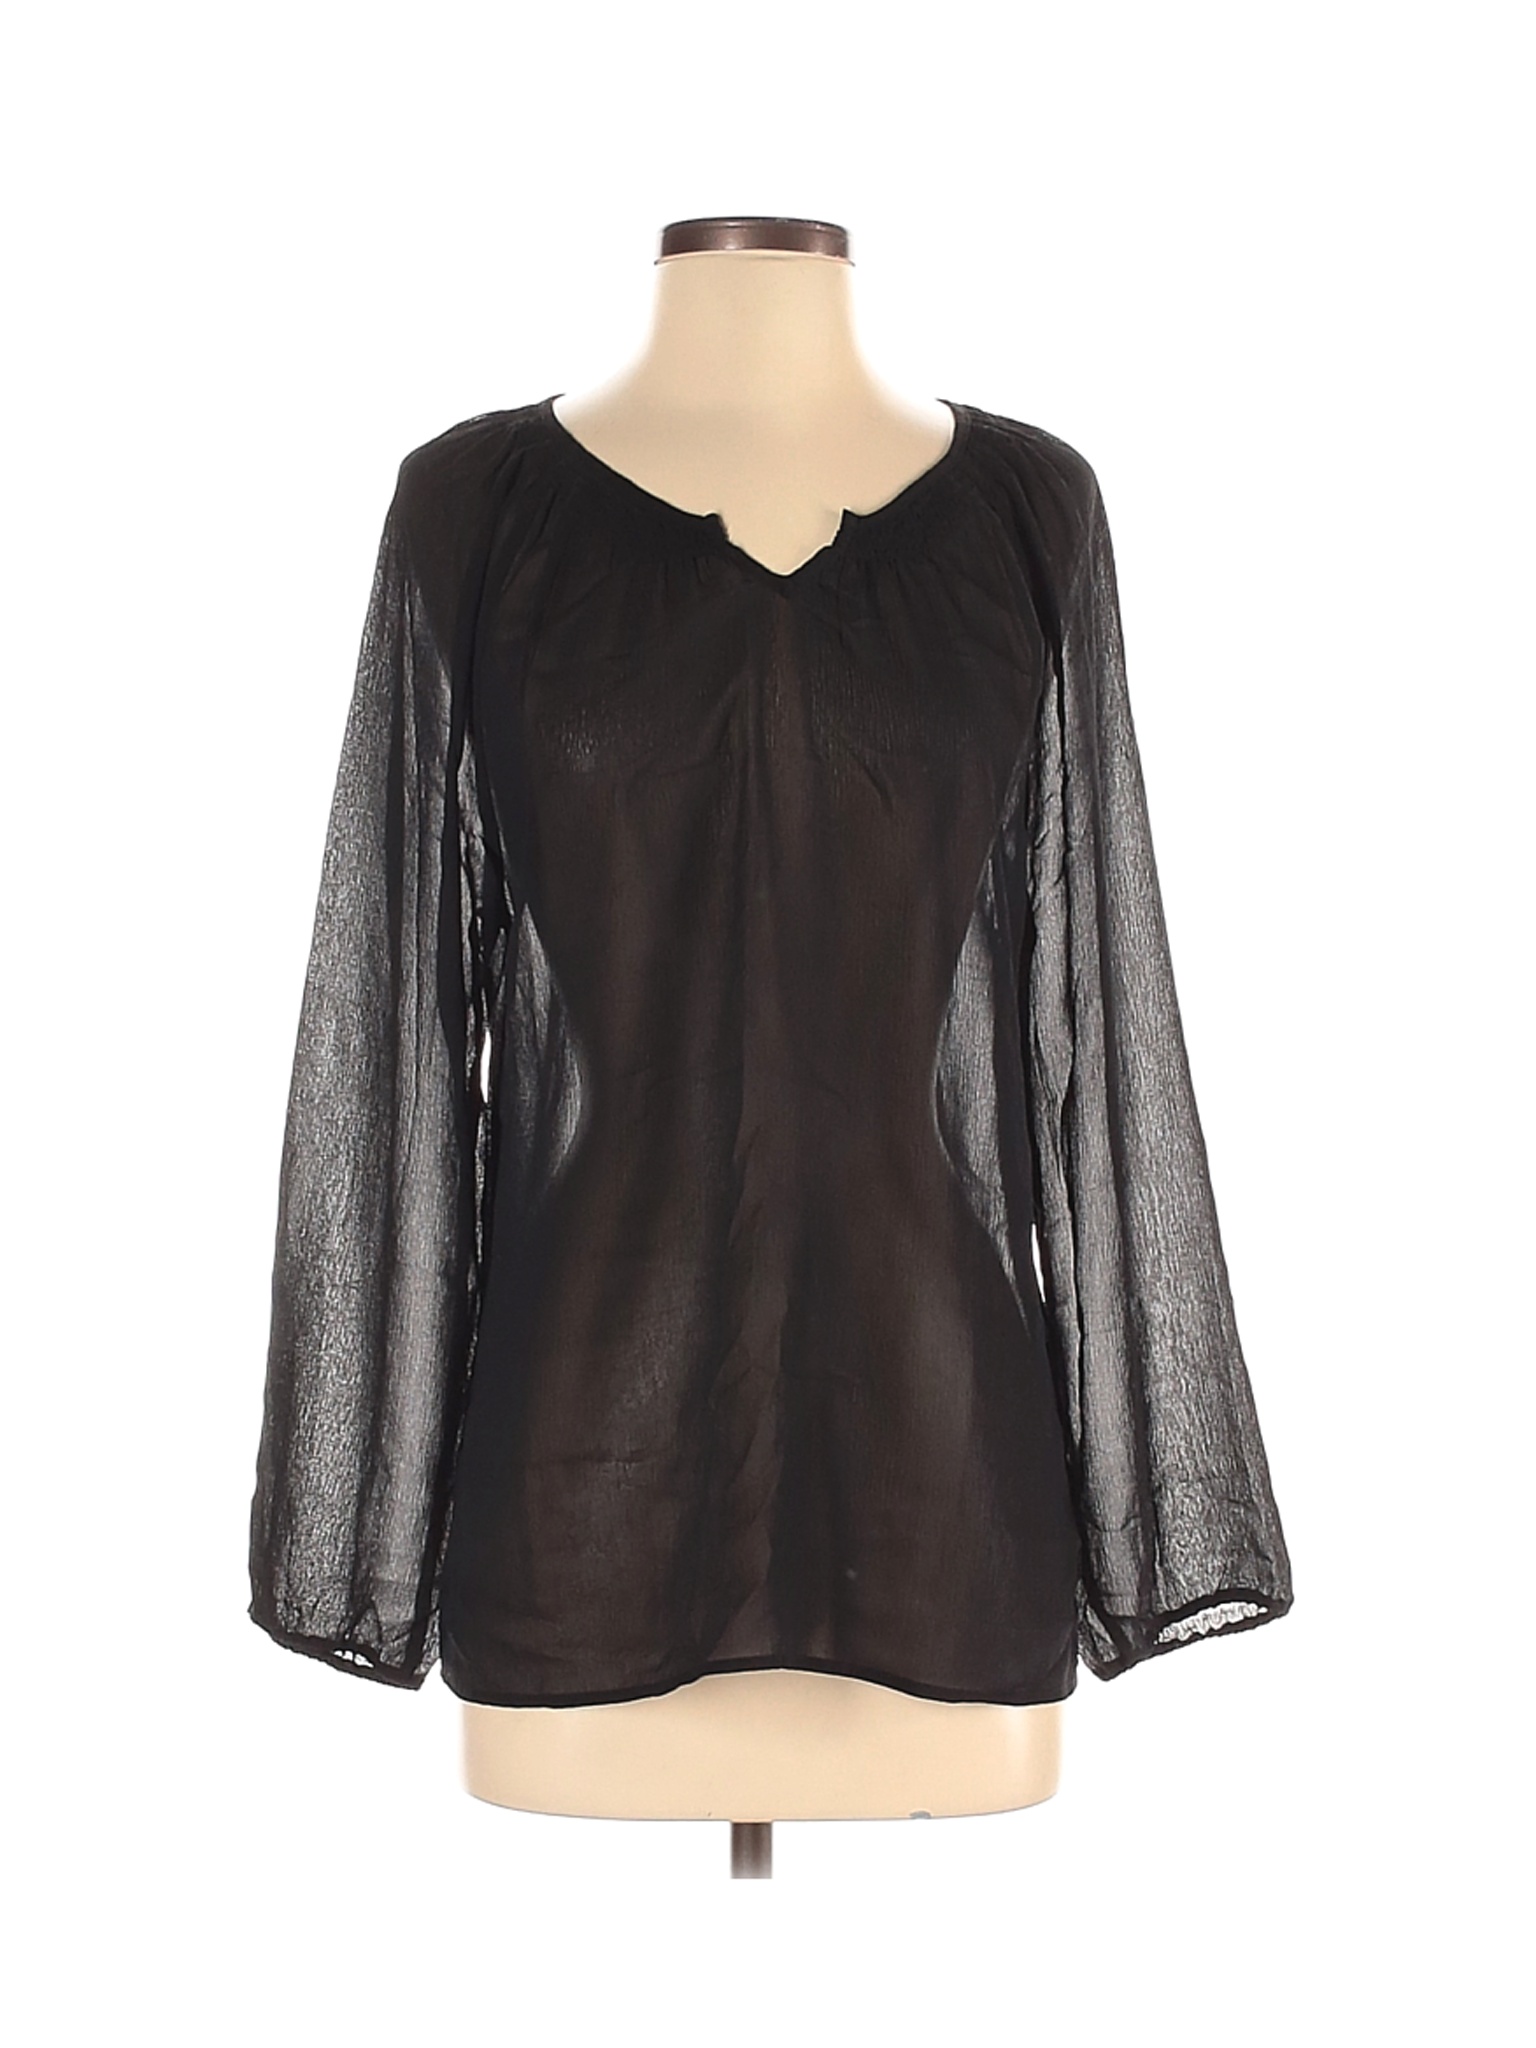 Garnet Hill Women Black 3/4 Sleeve Silk Top S | eBay